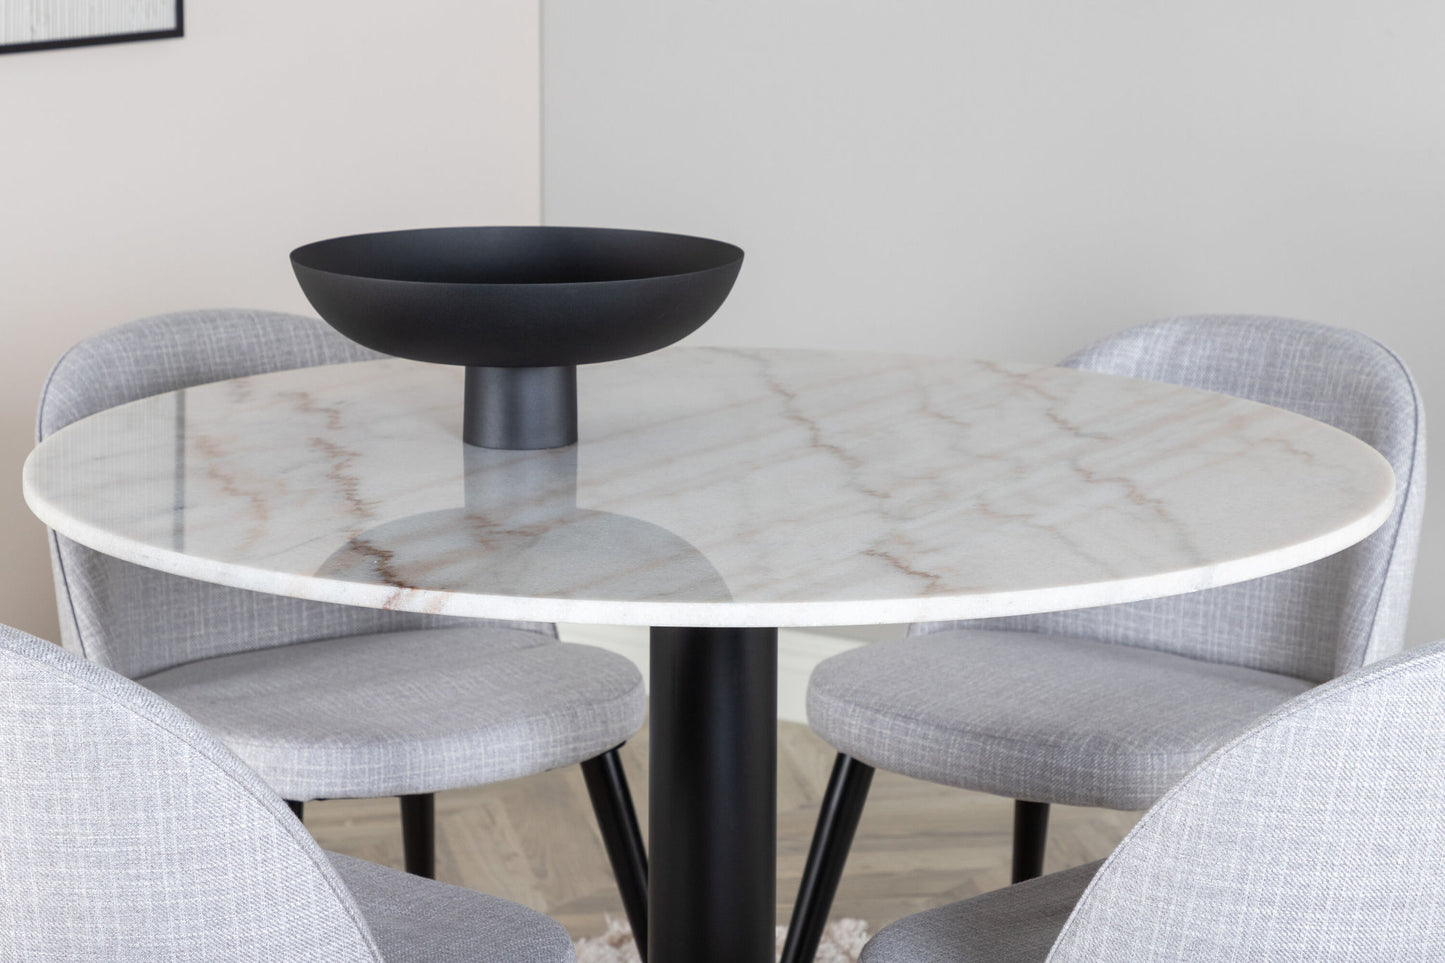 Estelle - Rundt spisebord, ø106 H75 - Hvid / Sort+ velour Stol - Sorte ben - LysegråStof